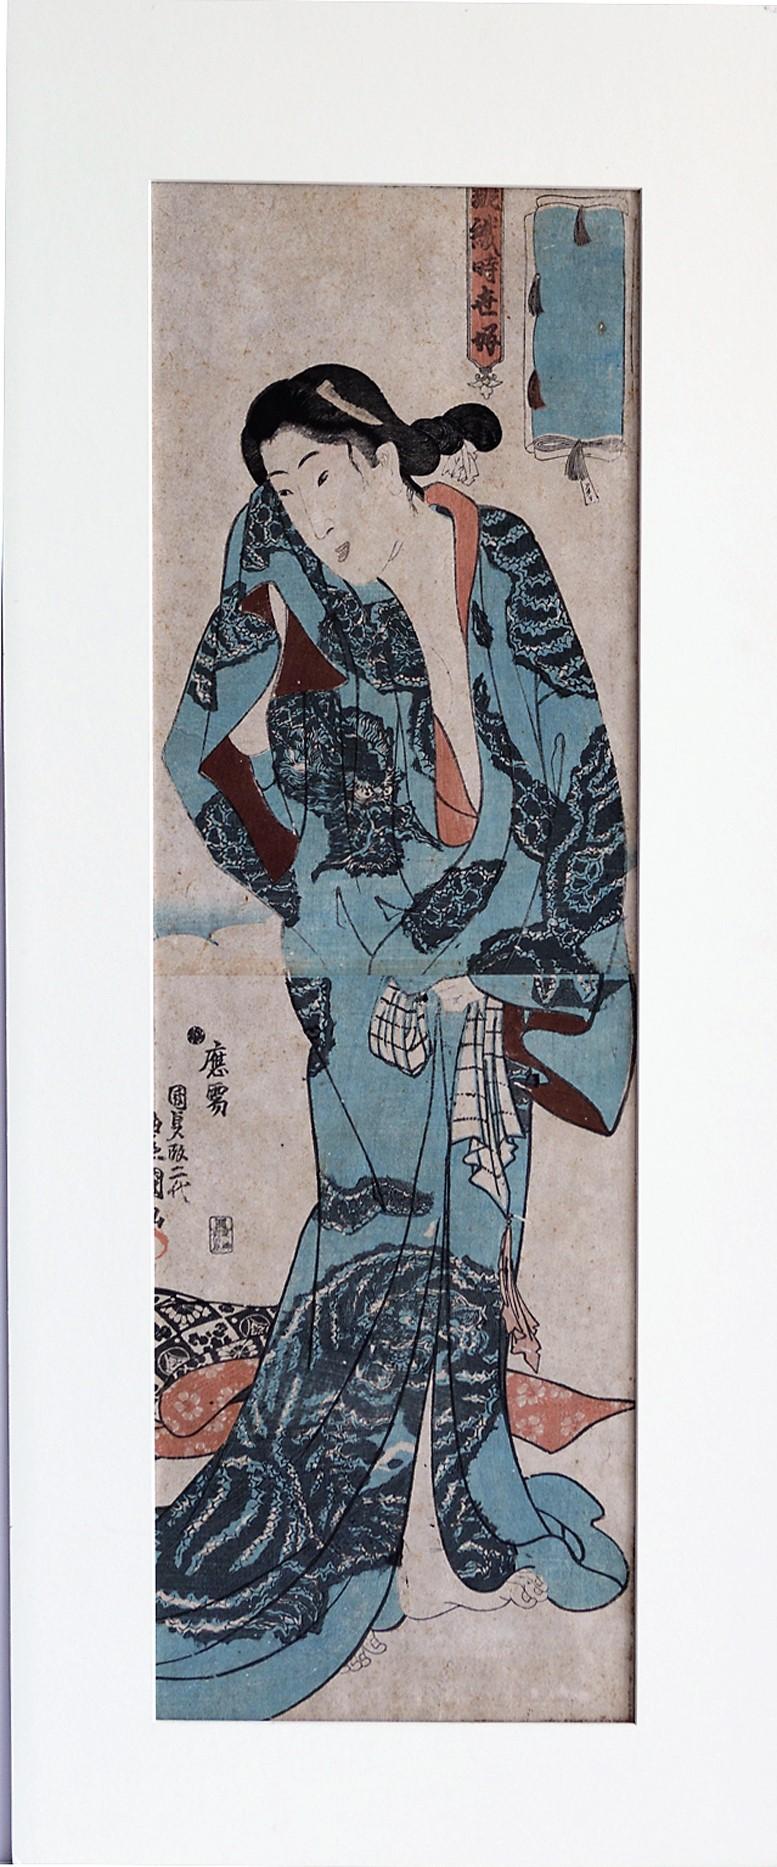  1844. Kakemono-e: 26 1/2 x 8 3/8. Series: Pairing beautiful Women with Kimono Fabrics. Appropriately mounted on black silk. Censor's seal: Yoshimura. Publisher: Aritaya Kiyoemon.Signed Oju Kunisada (By Kunisada). 

Housed in a  31 3/4 x 13 3/4-inch